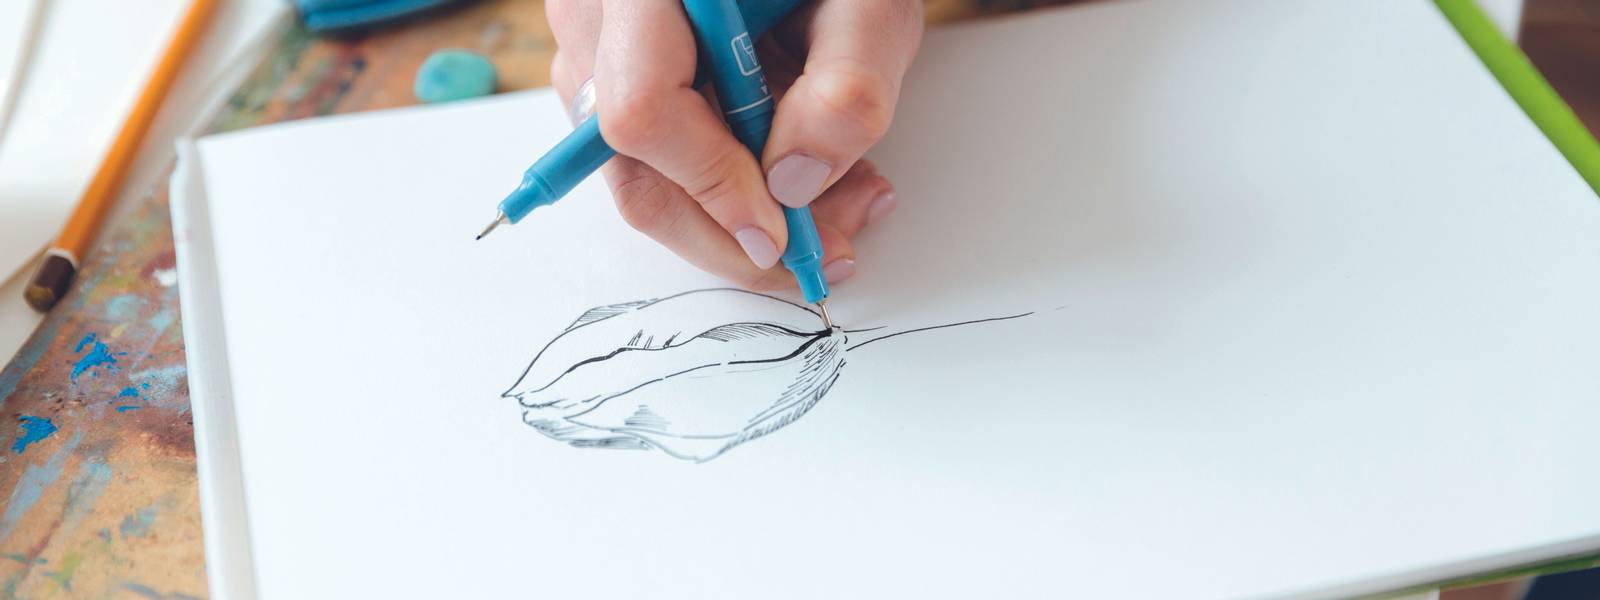 Closeup of hands of woman artist drawing with gel ink pen in sketchbook